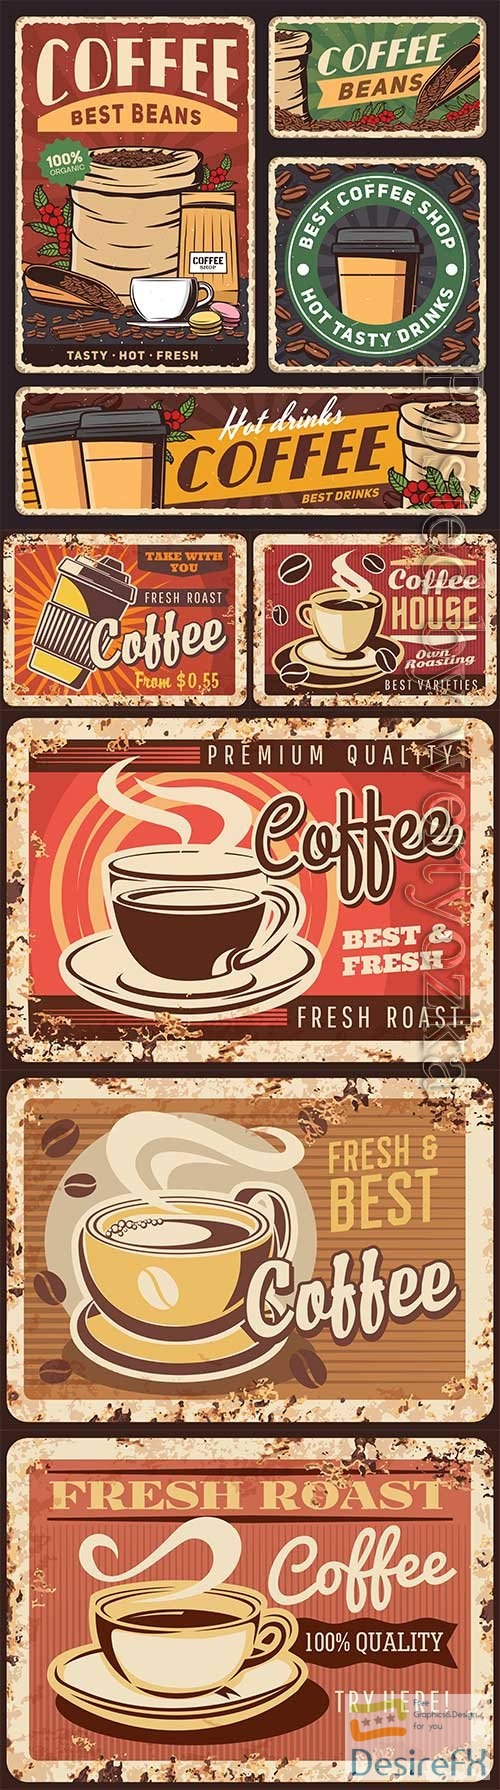 Coffee vintage advertising posters in vector